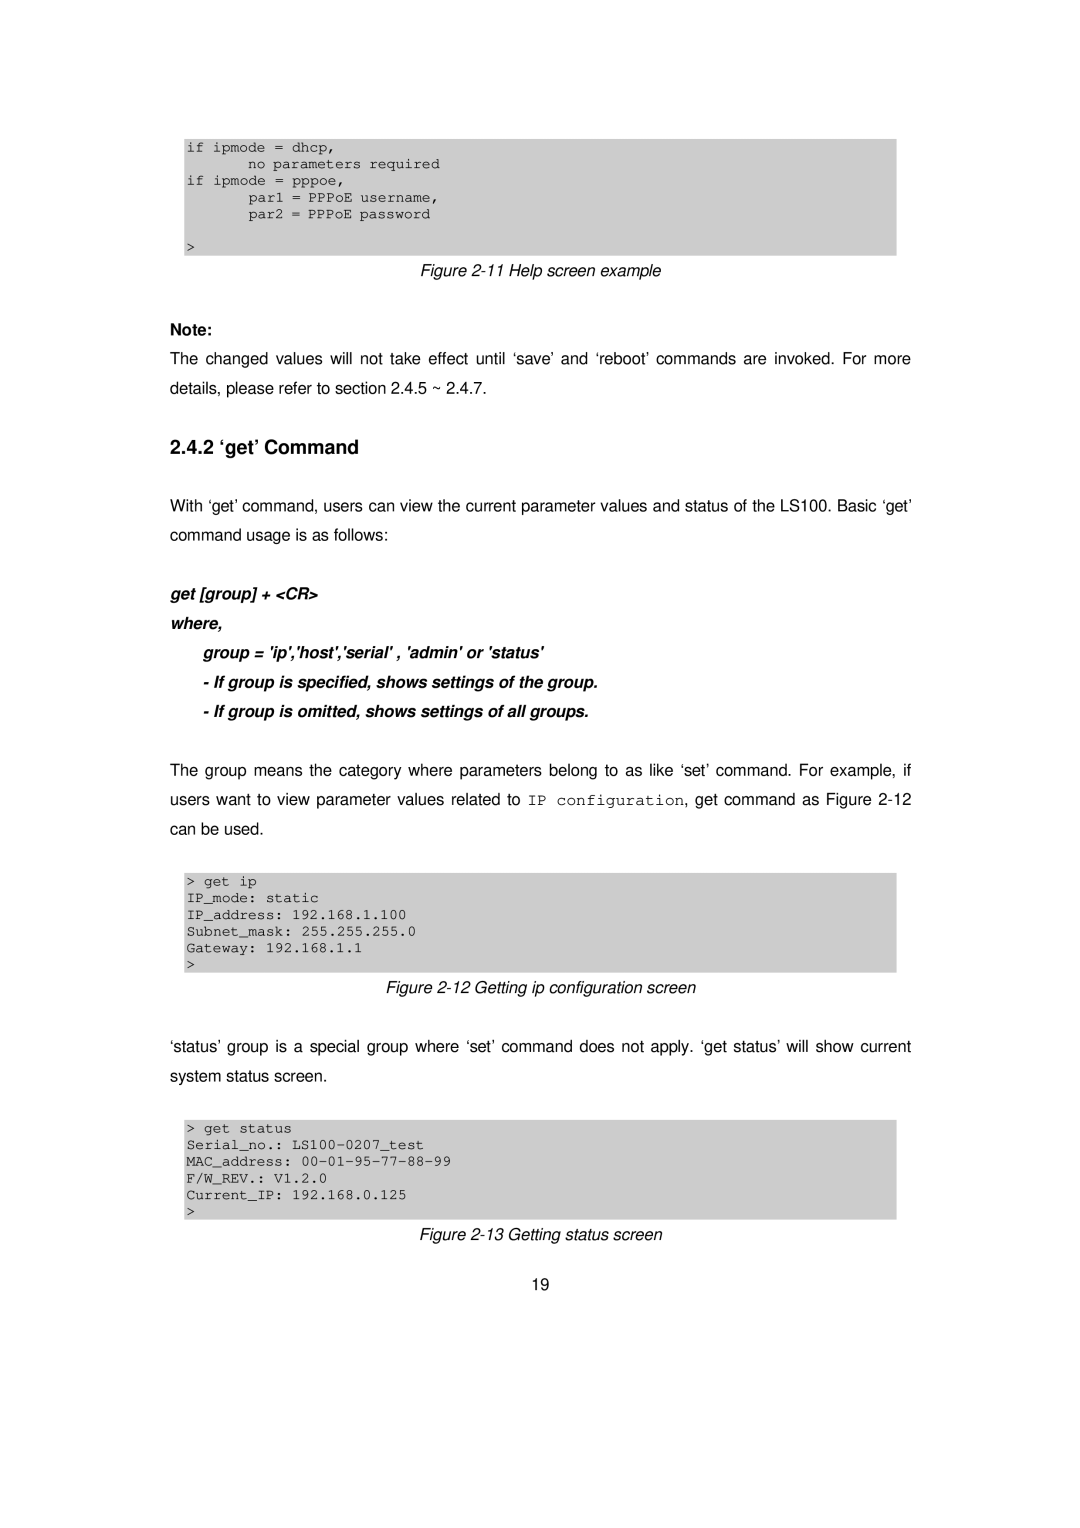 Senatek LS100 manual 2 ‘get’ Command, Help screen example 